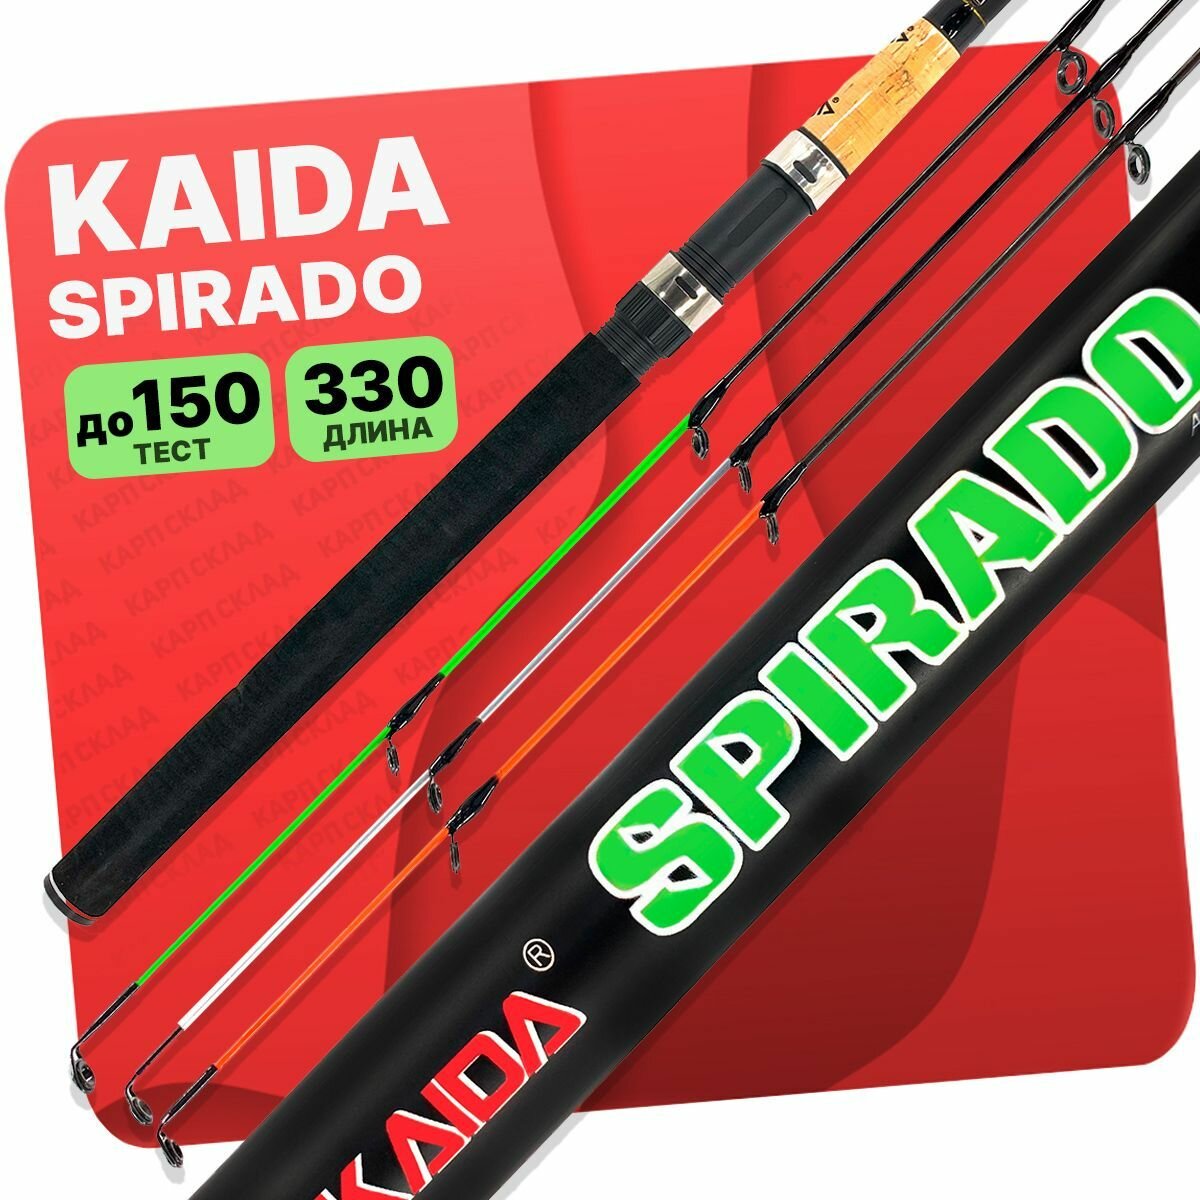 Фидер Kaida spirado 60-150 гр. 3,3 м. 302-330